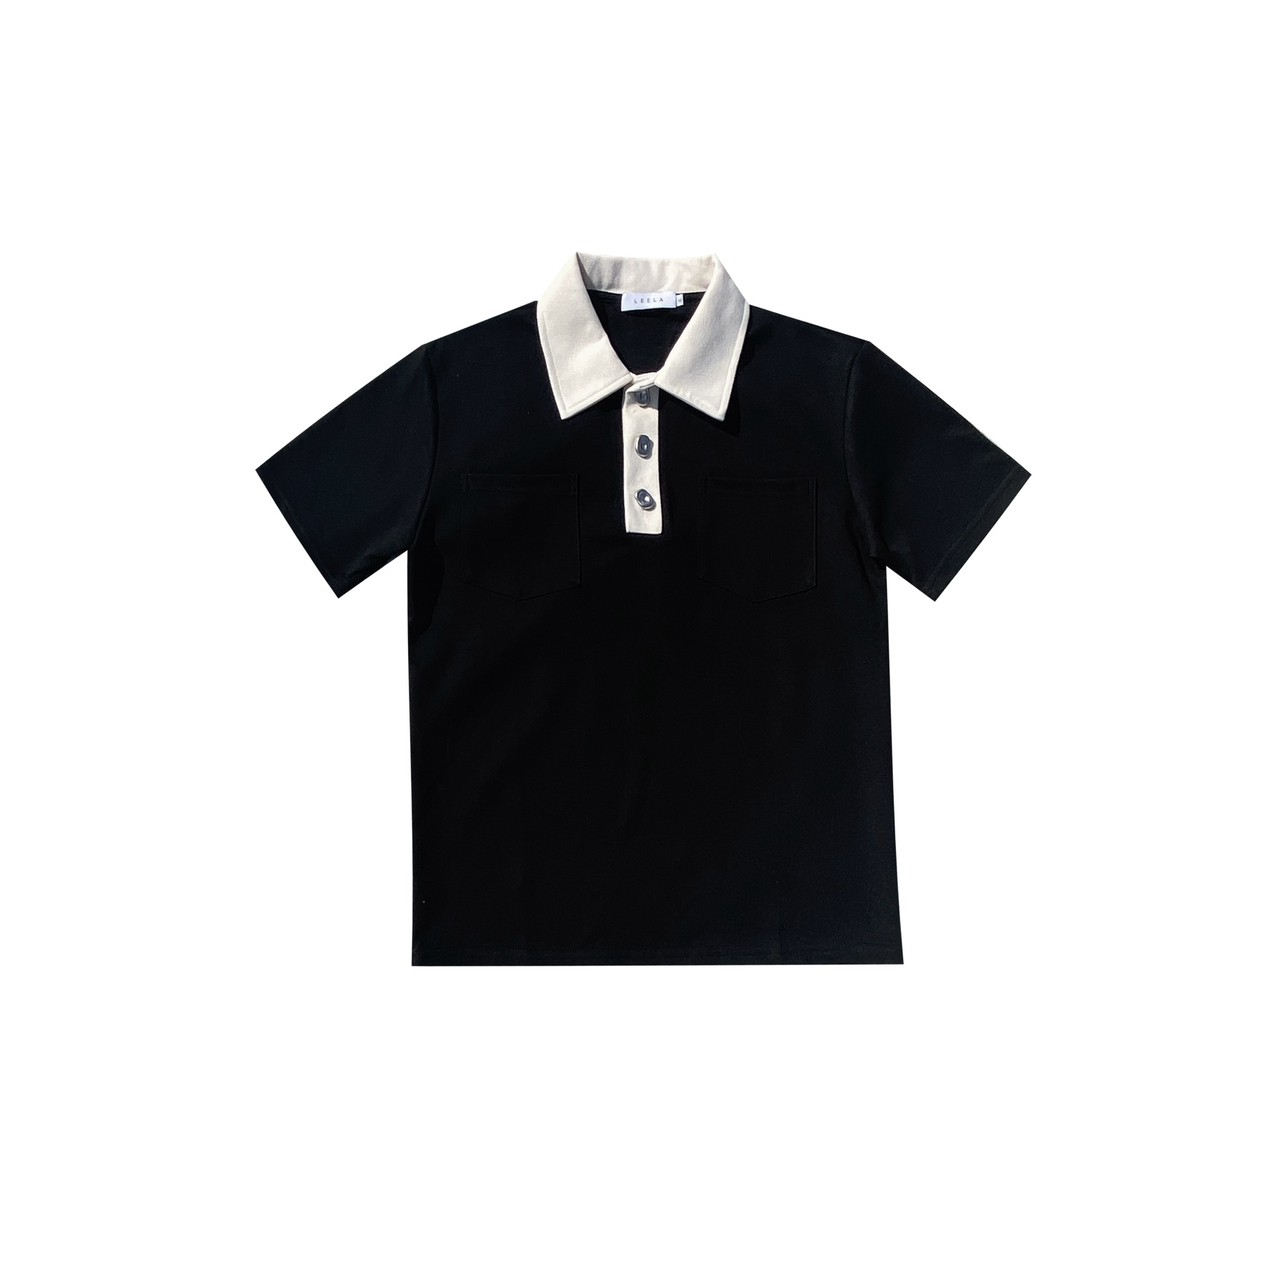 Two-Tone Polo Shirt (Black)